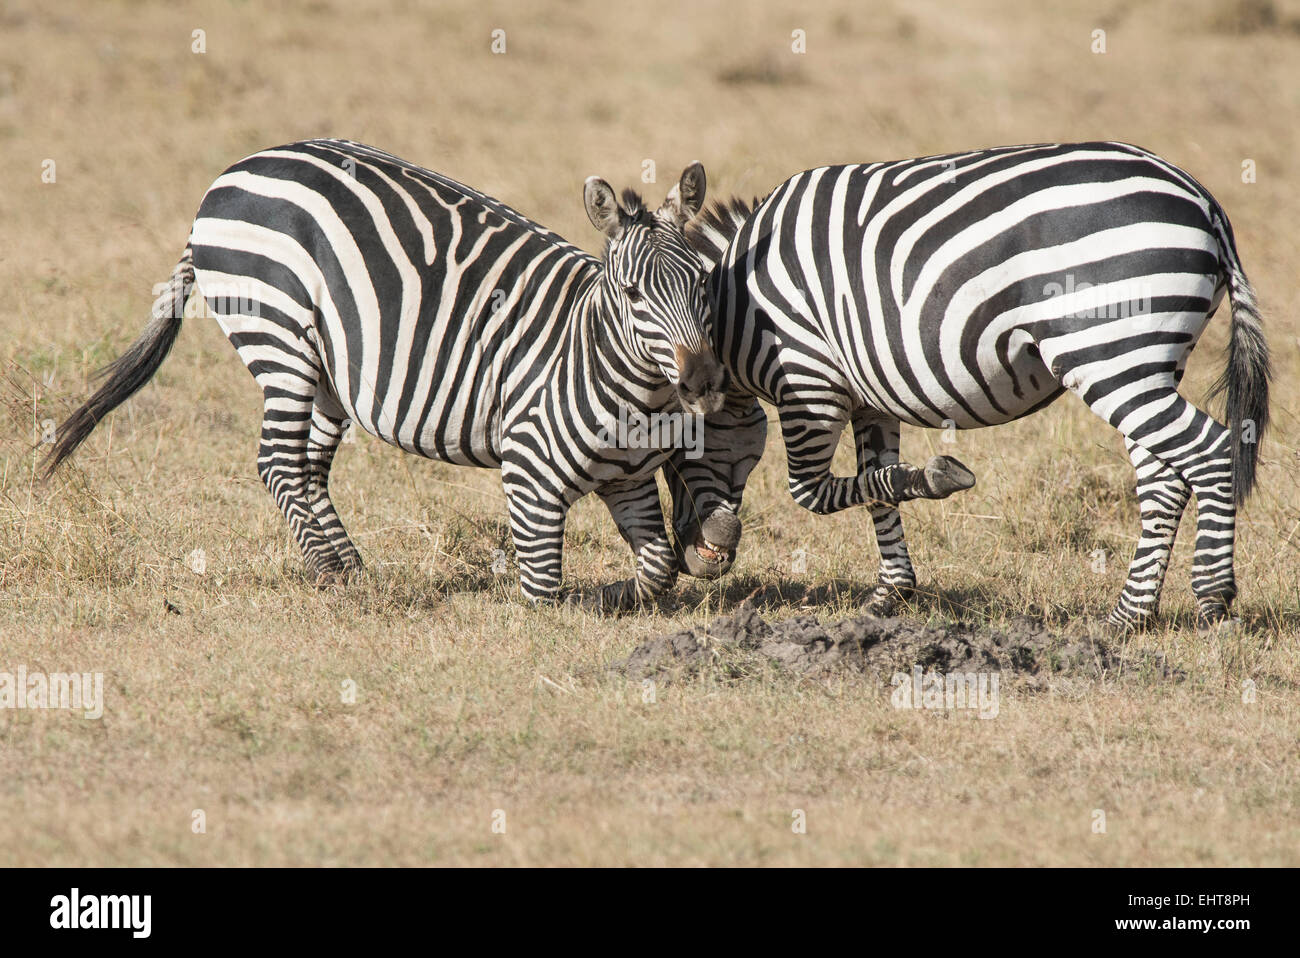 Zebra,Equus quagga,Stepp   Fotodienst Schreyer 0049 172 162 5407 www.sportfoto-schreyer.jimdo.com Afrika,Kenia, Massai Mara 2015 Stock Photo